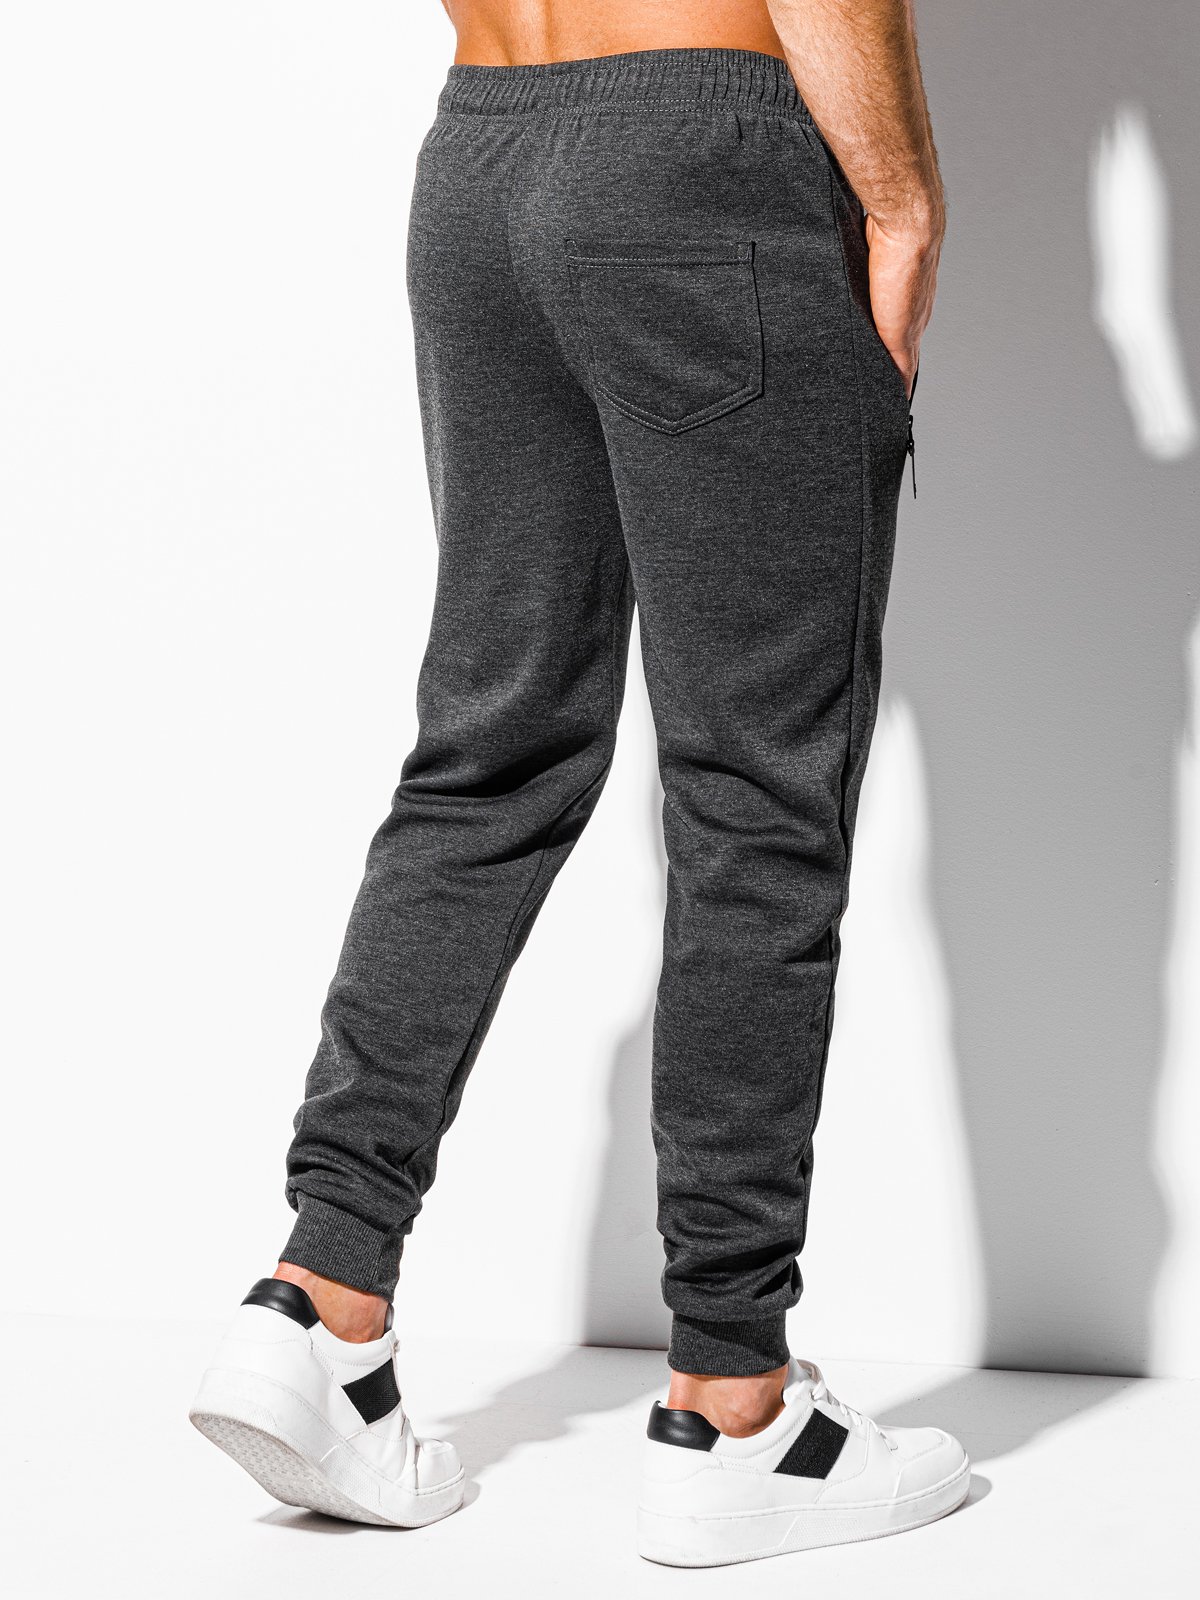 Men's sweatpants P1050 - dark grey